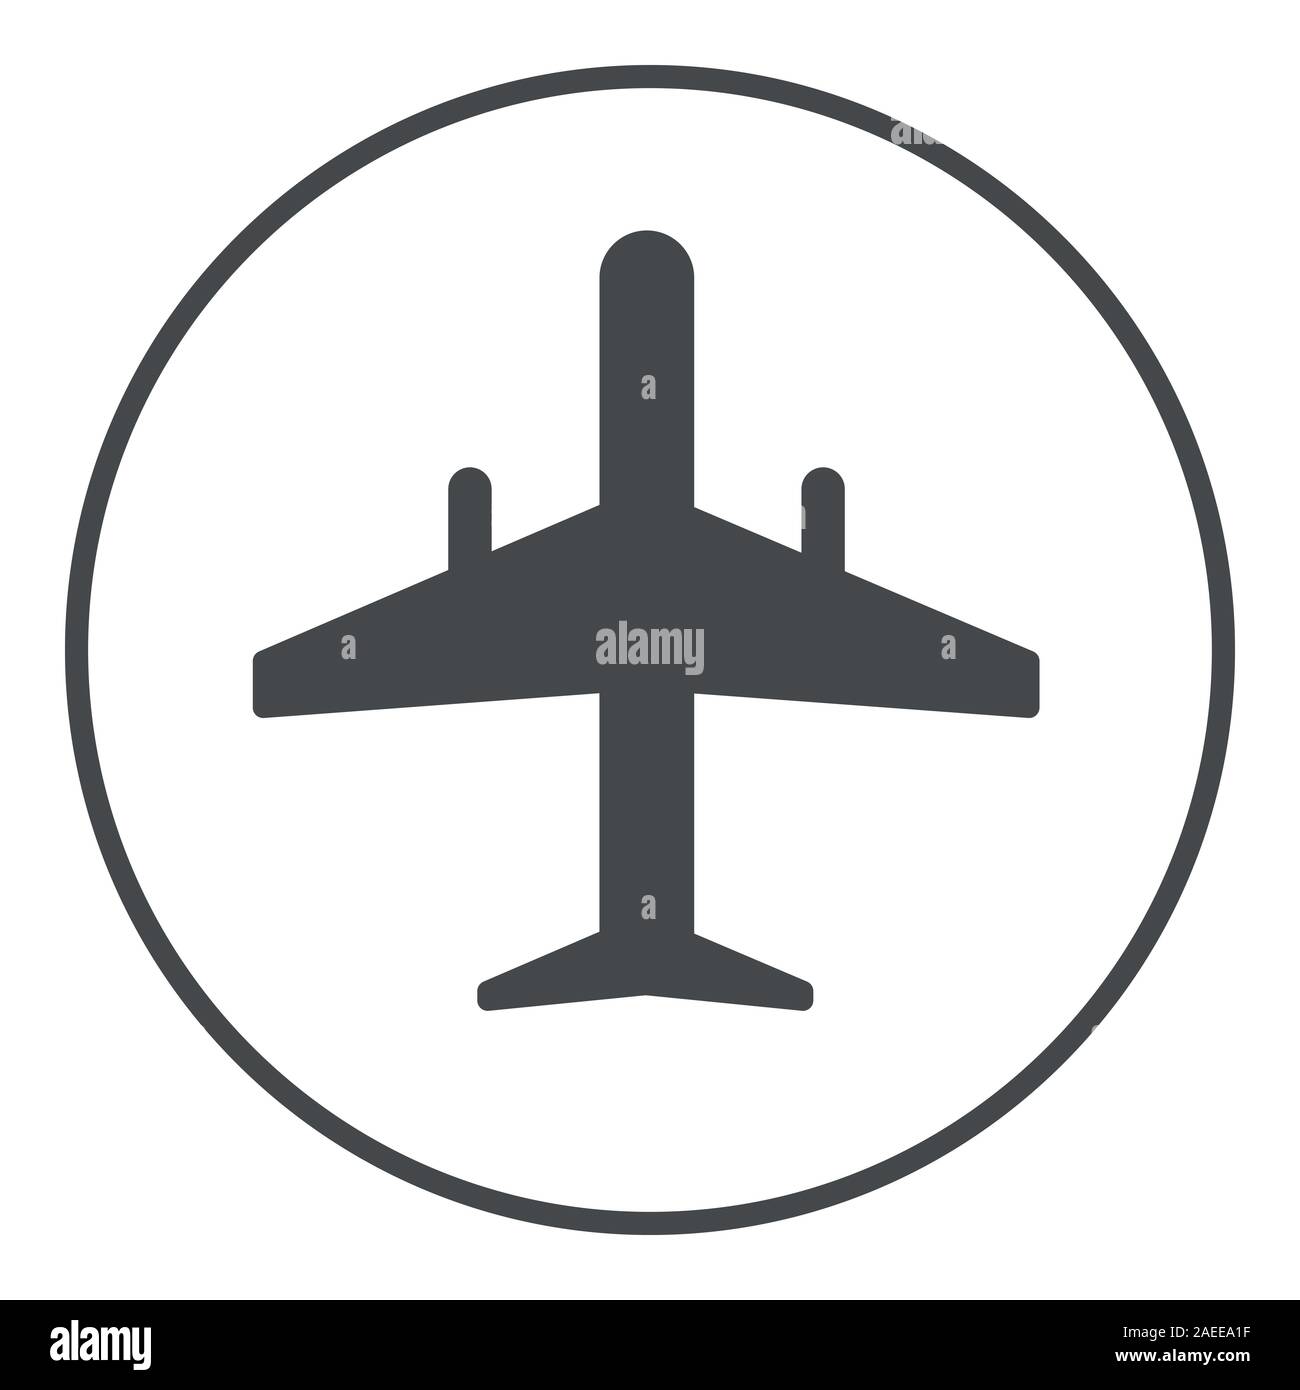 Airplane icon, plane symbol flat label in circle - vector symbol illustration Stock Vector